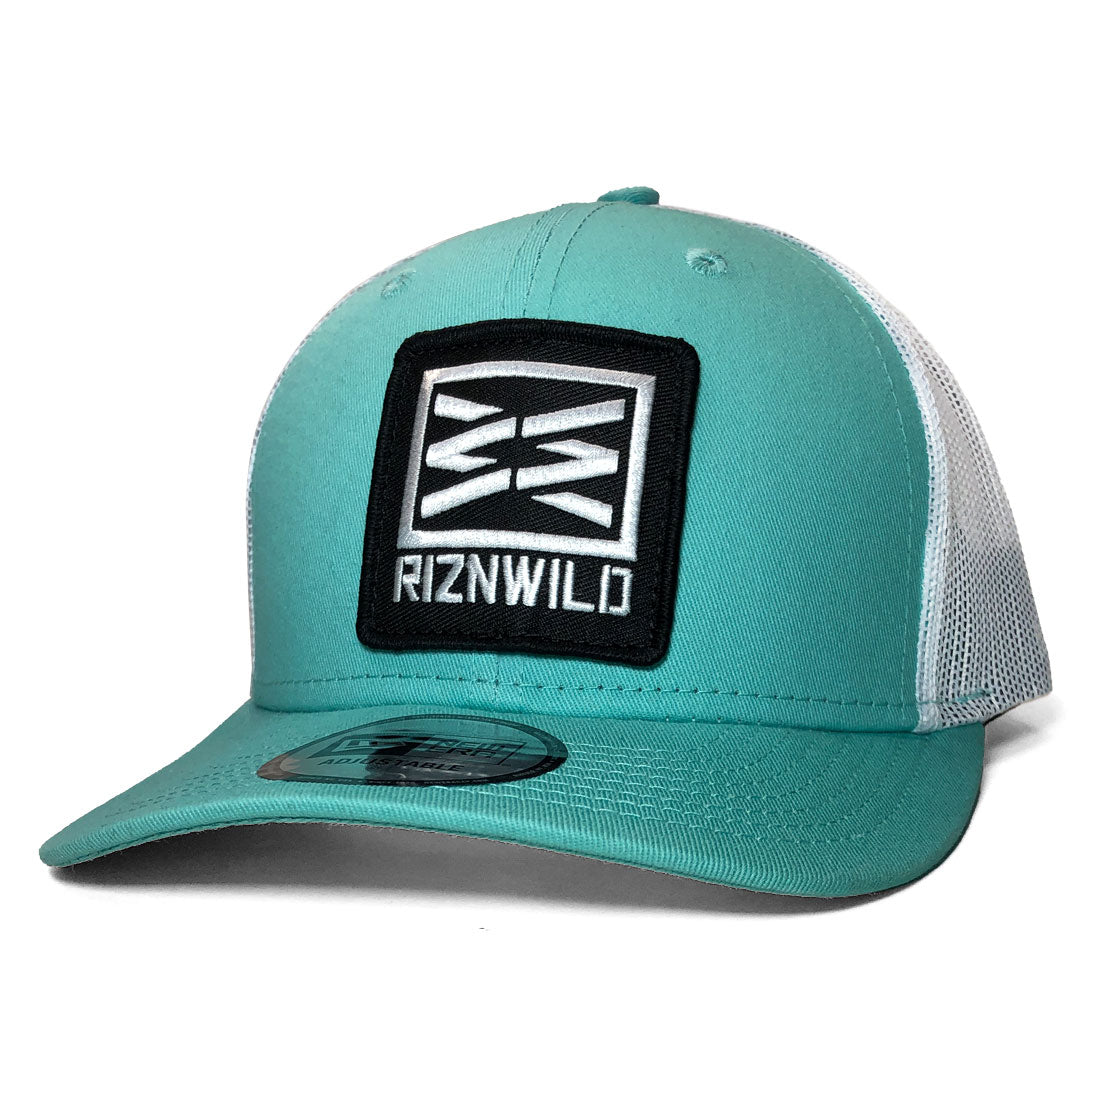 RIZNWILD new era snap back hat mint/white color